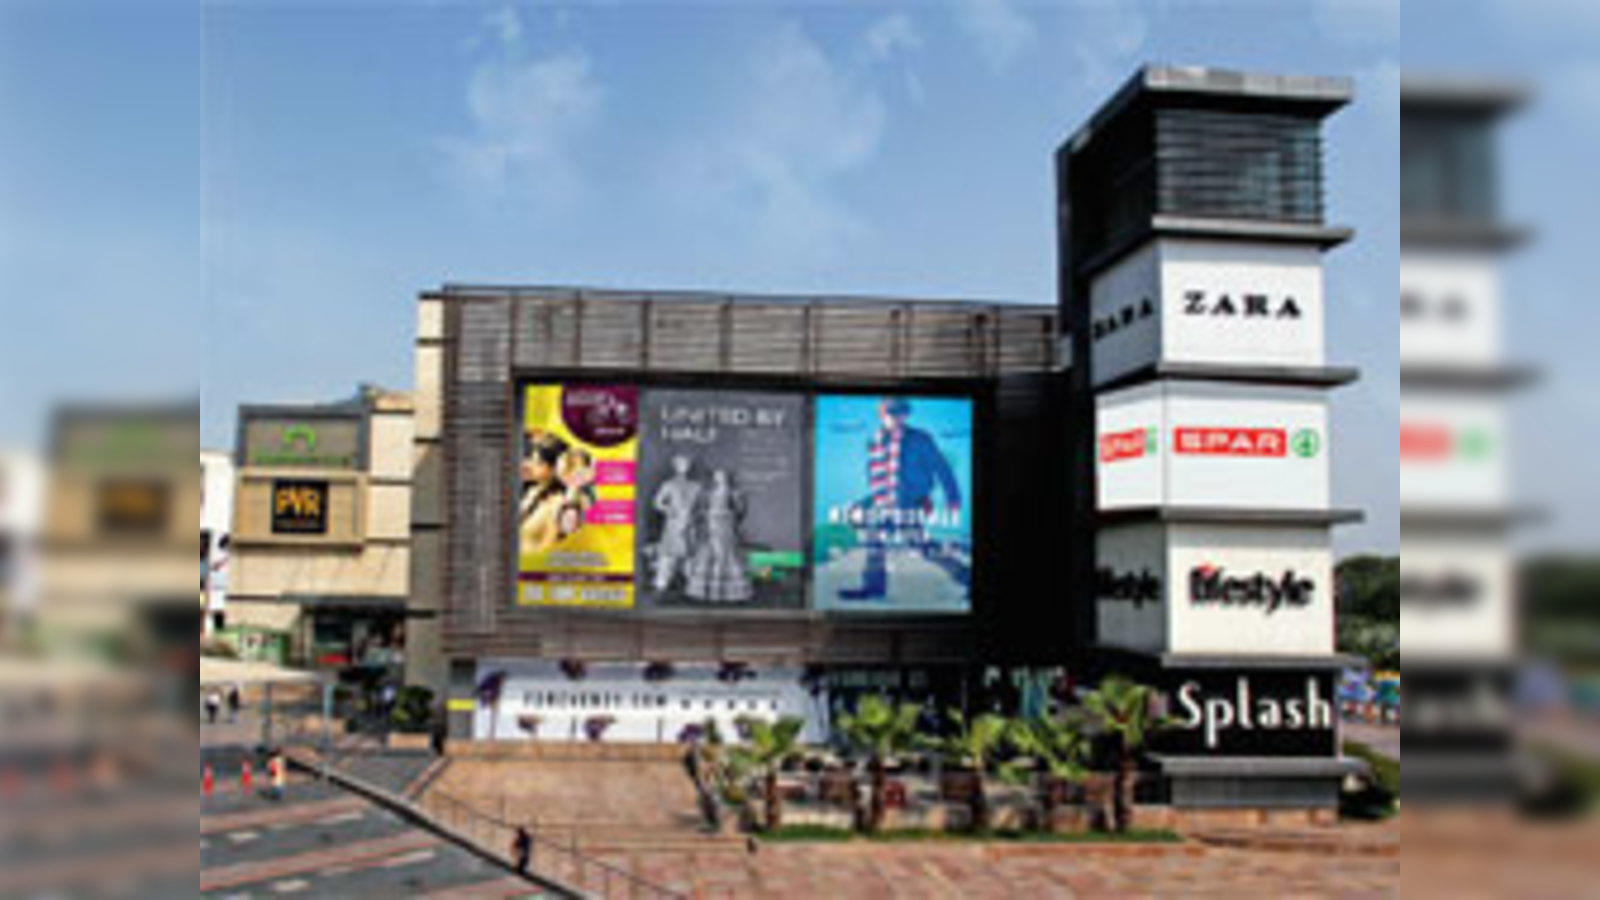 Innovation in shopping malls industry